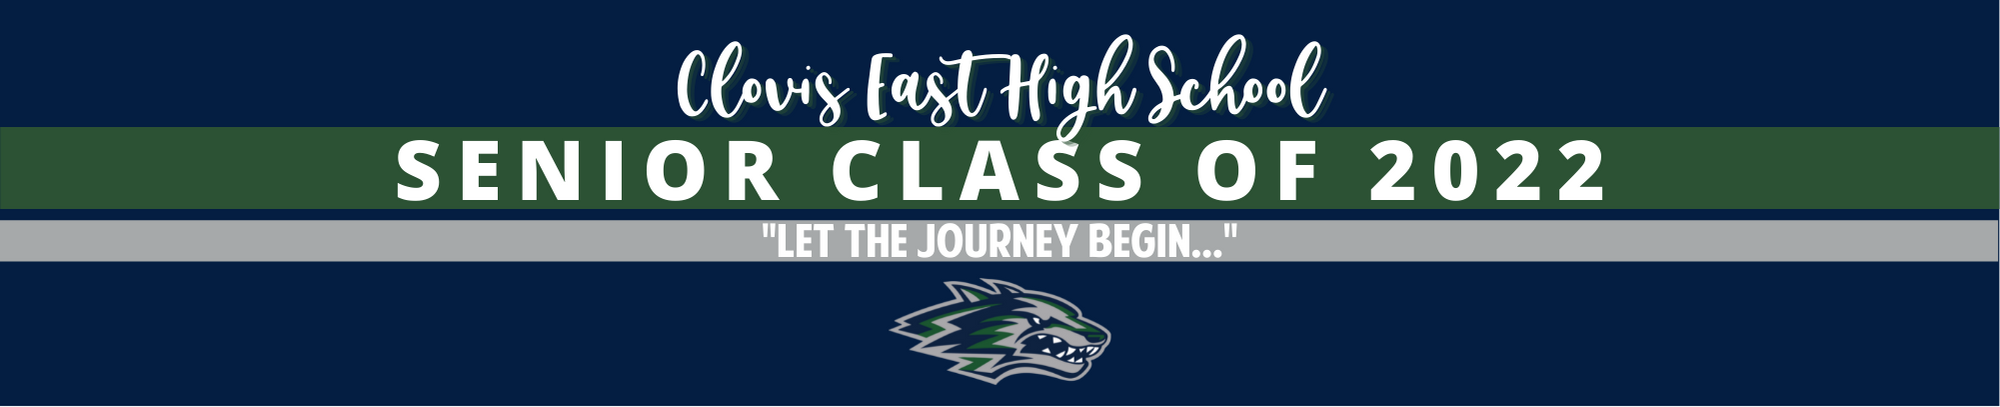 Clovis East High School - Senior Class of 2022 - "Let the journey begin..."